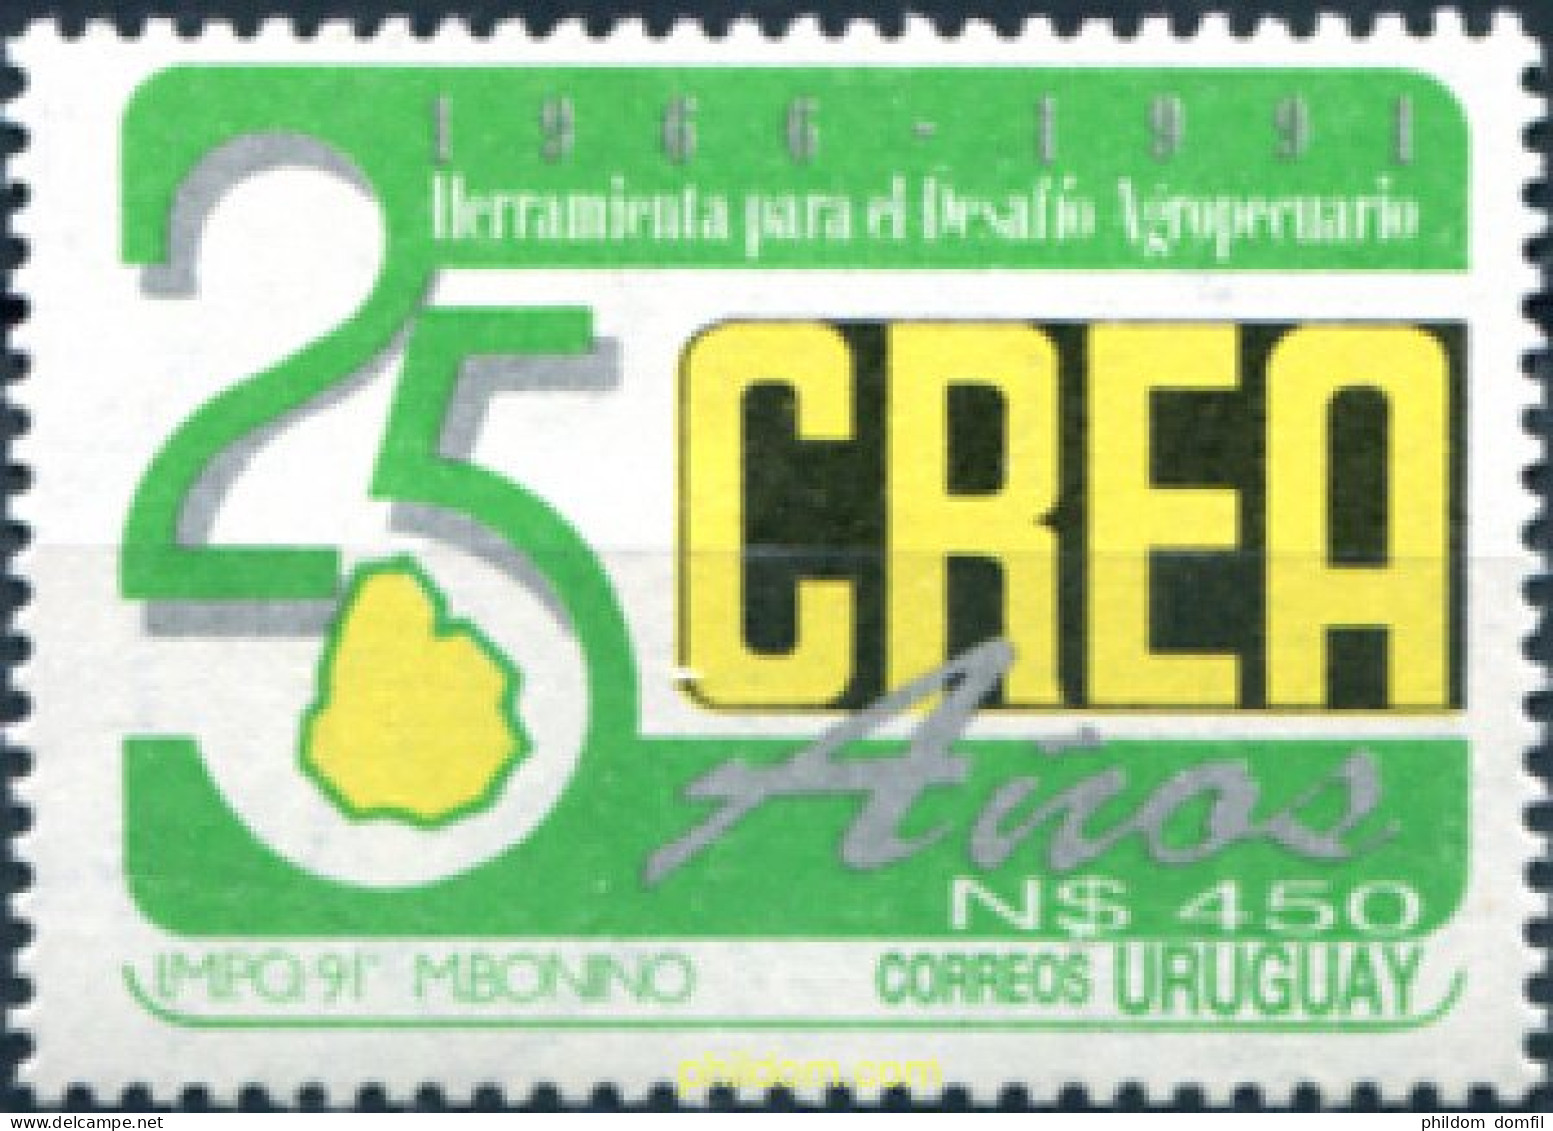 297315 MNH URUGUAY 1991 25 ANIVERSARIO "CREA" - Agriculture